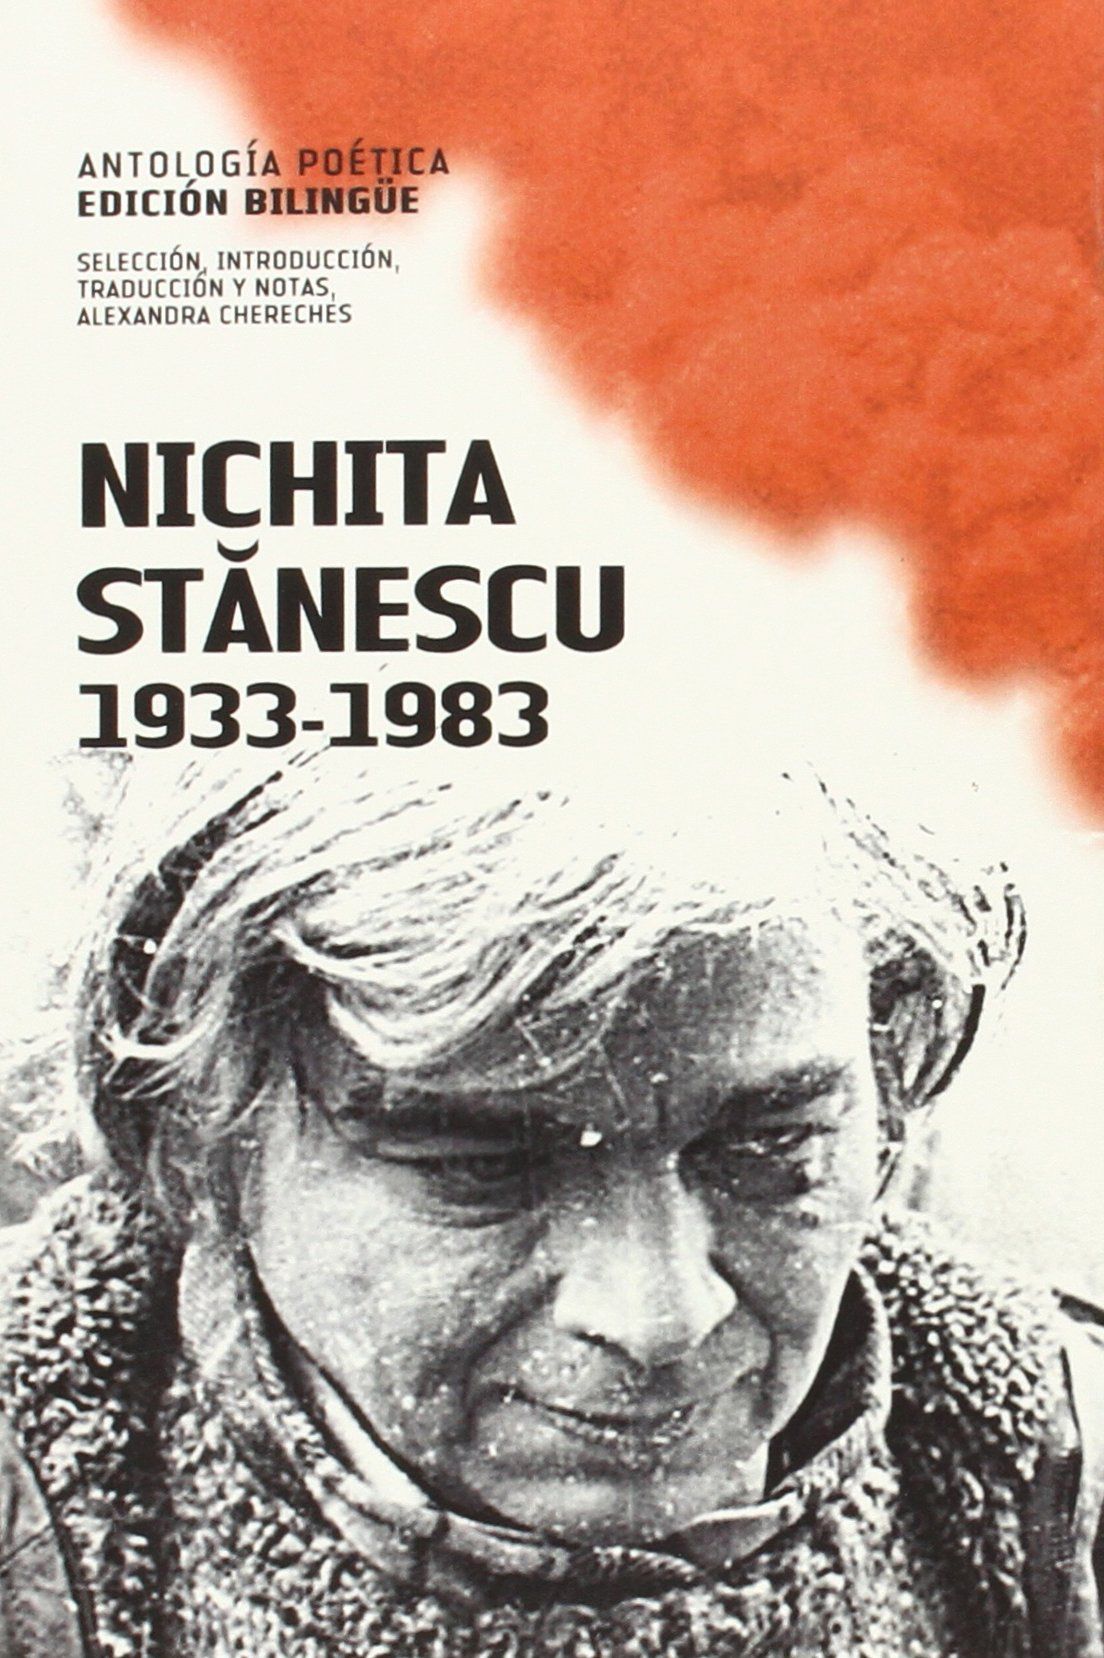 ANTOLOGIA POETICA NICHITA STANESCU 1933-1983. 